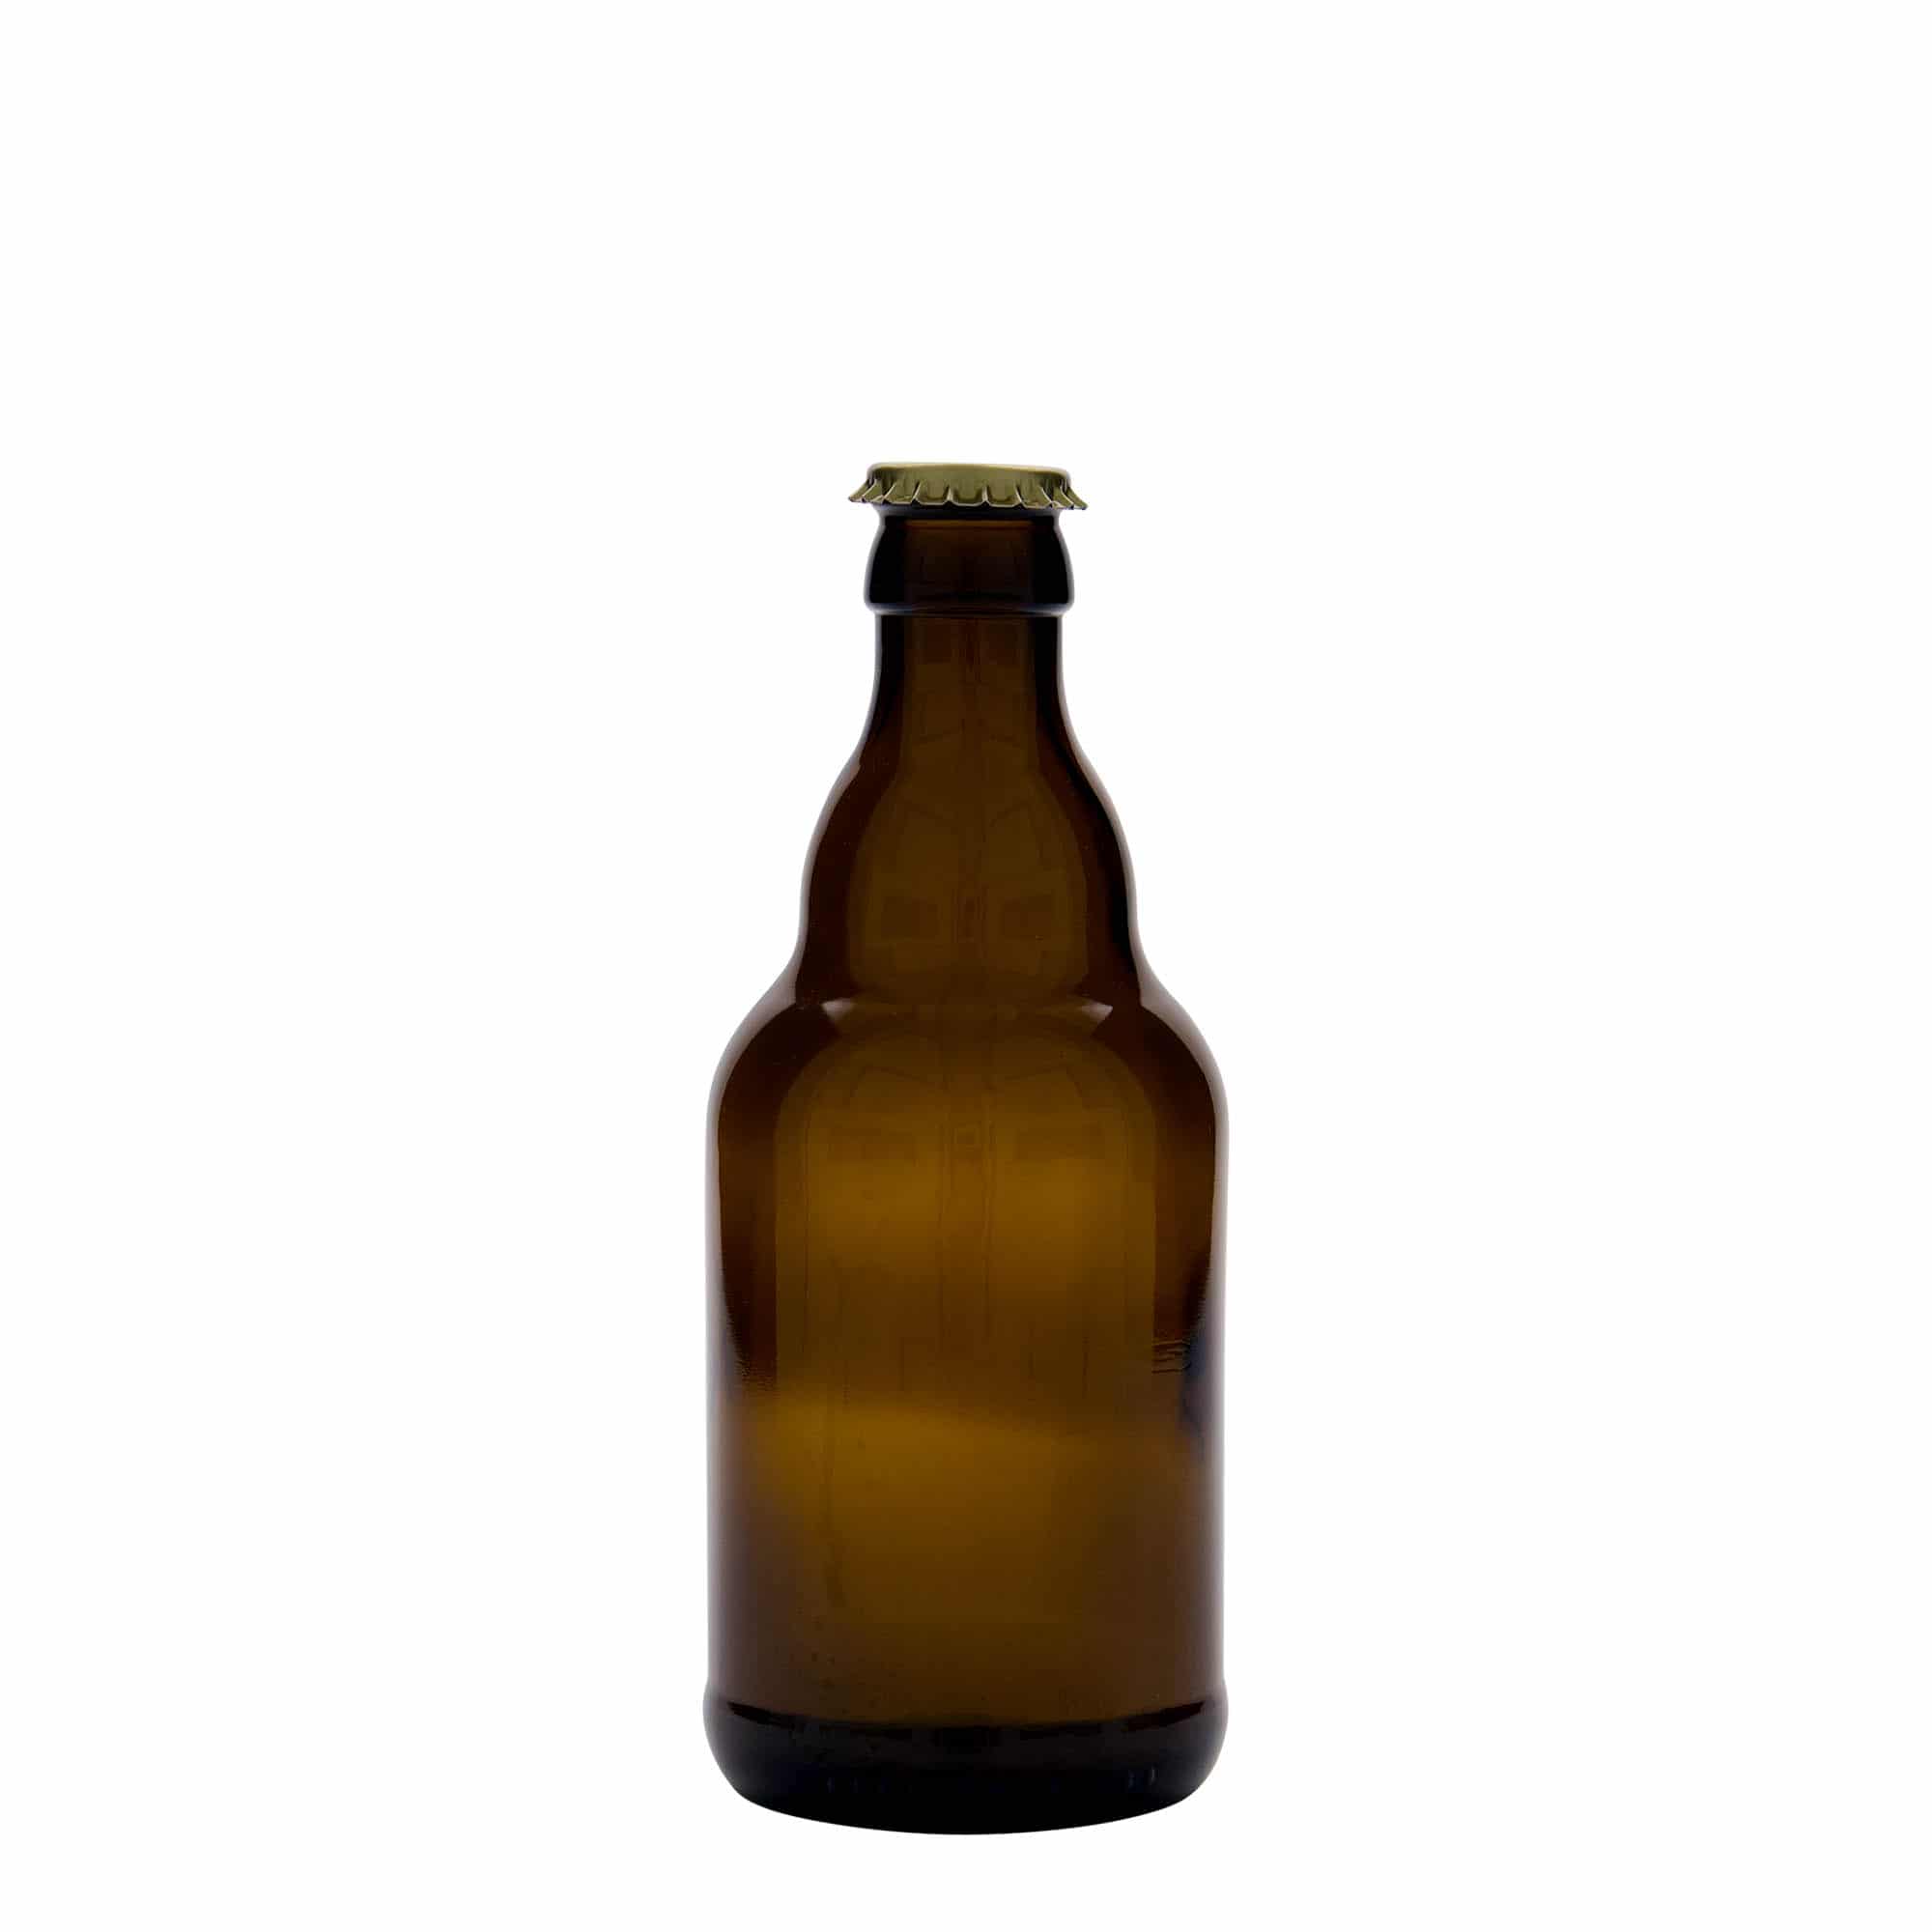 330 ml ölflaska 'Steinie', glas, brun, mynning: kronkapsyl